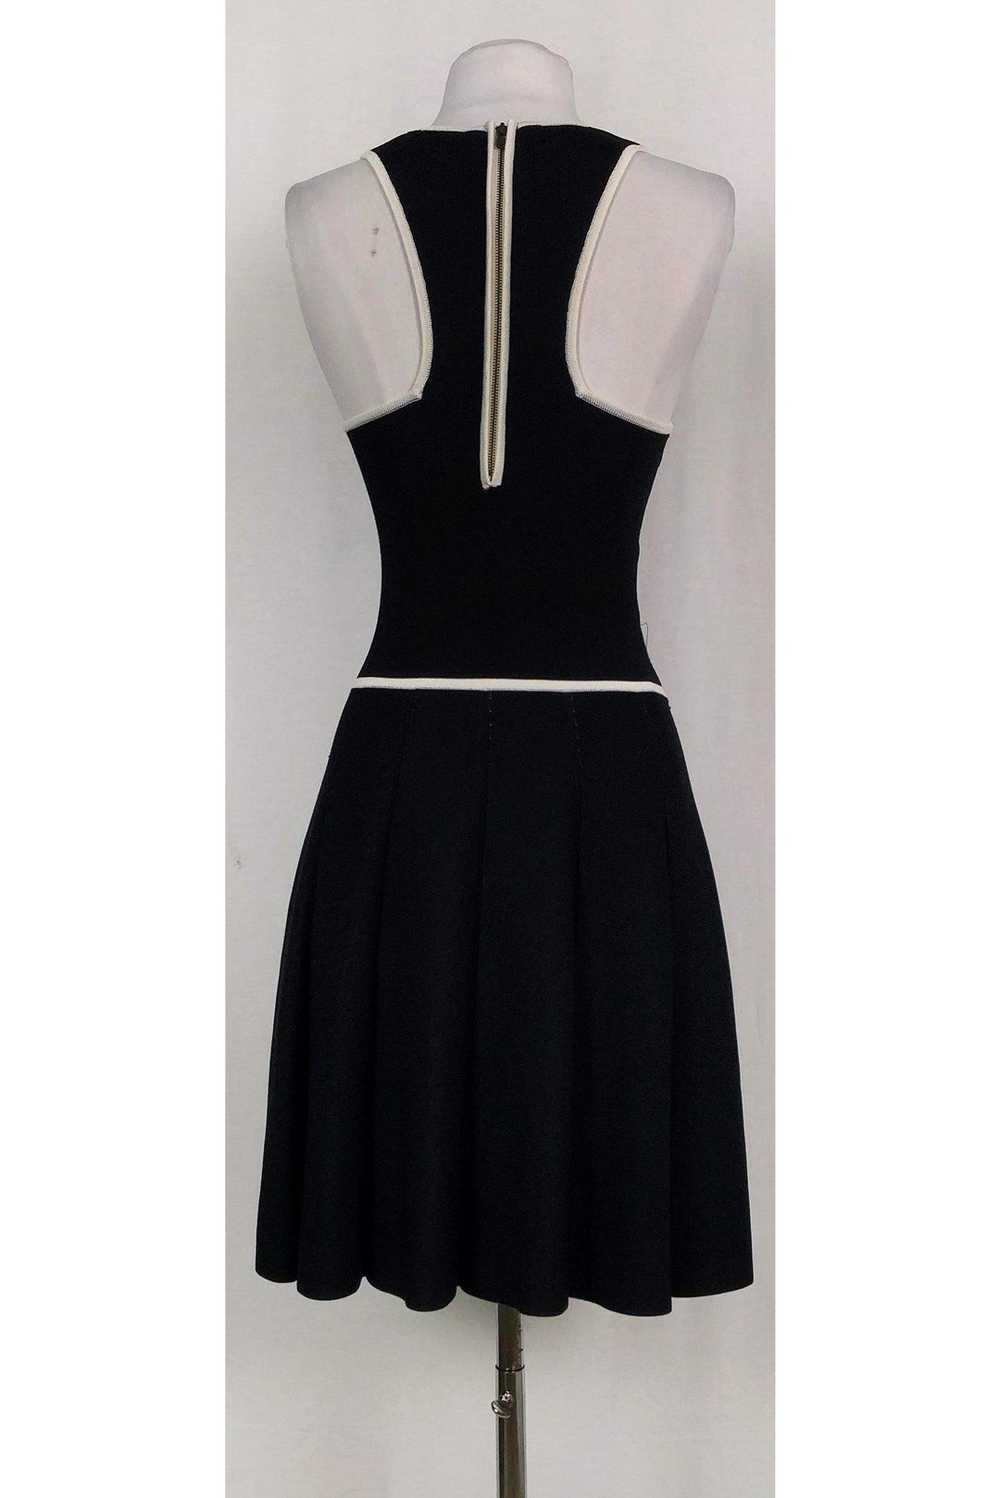 Parker - Black & White Trim Dress Sz XS - image 3